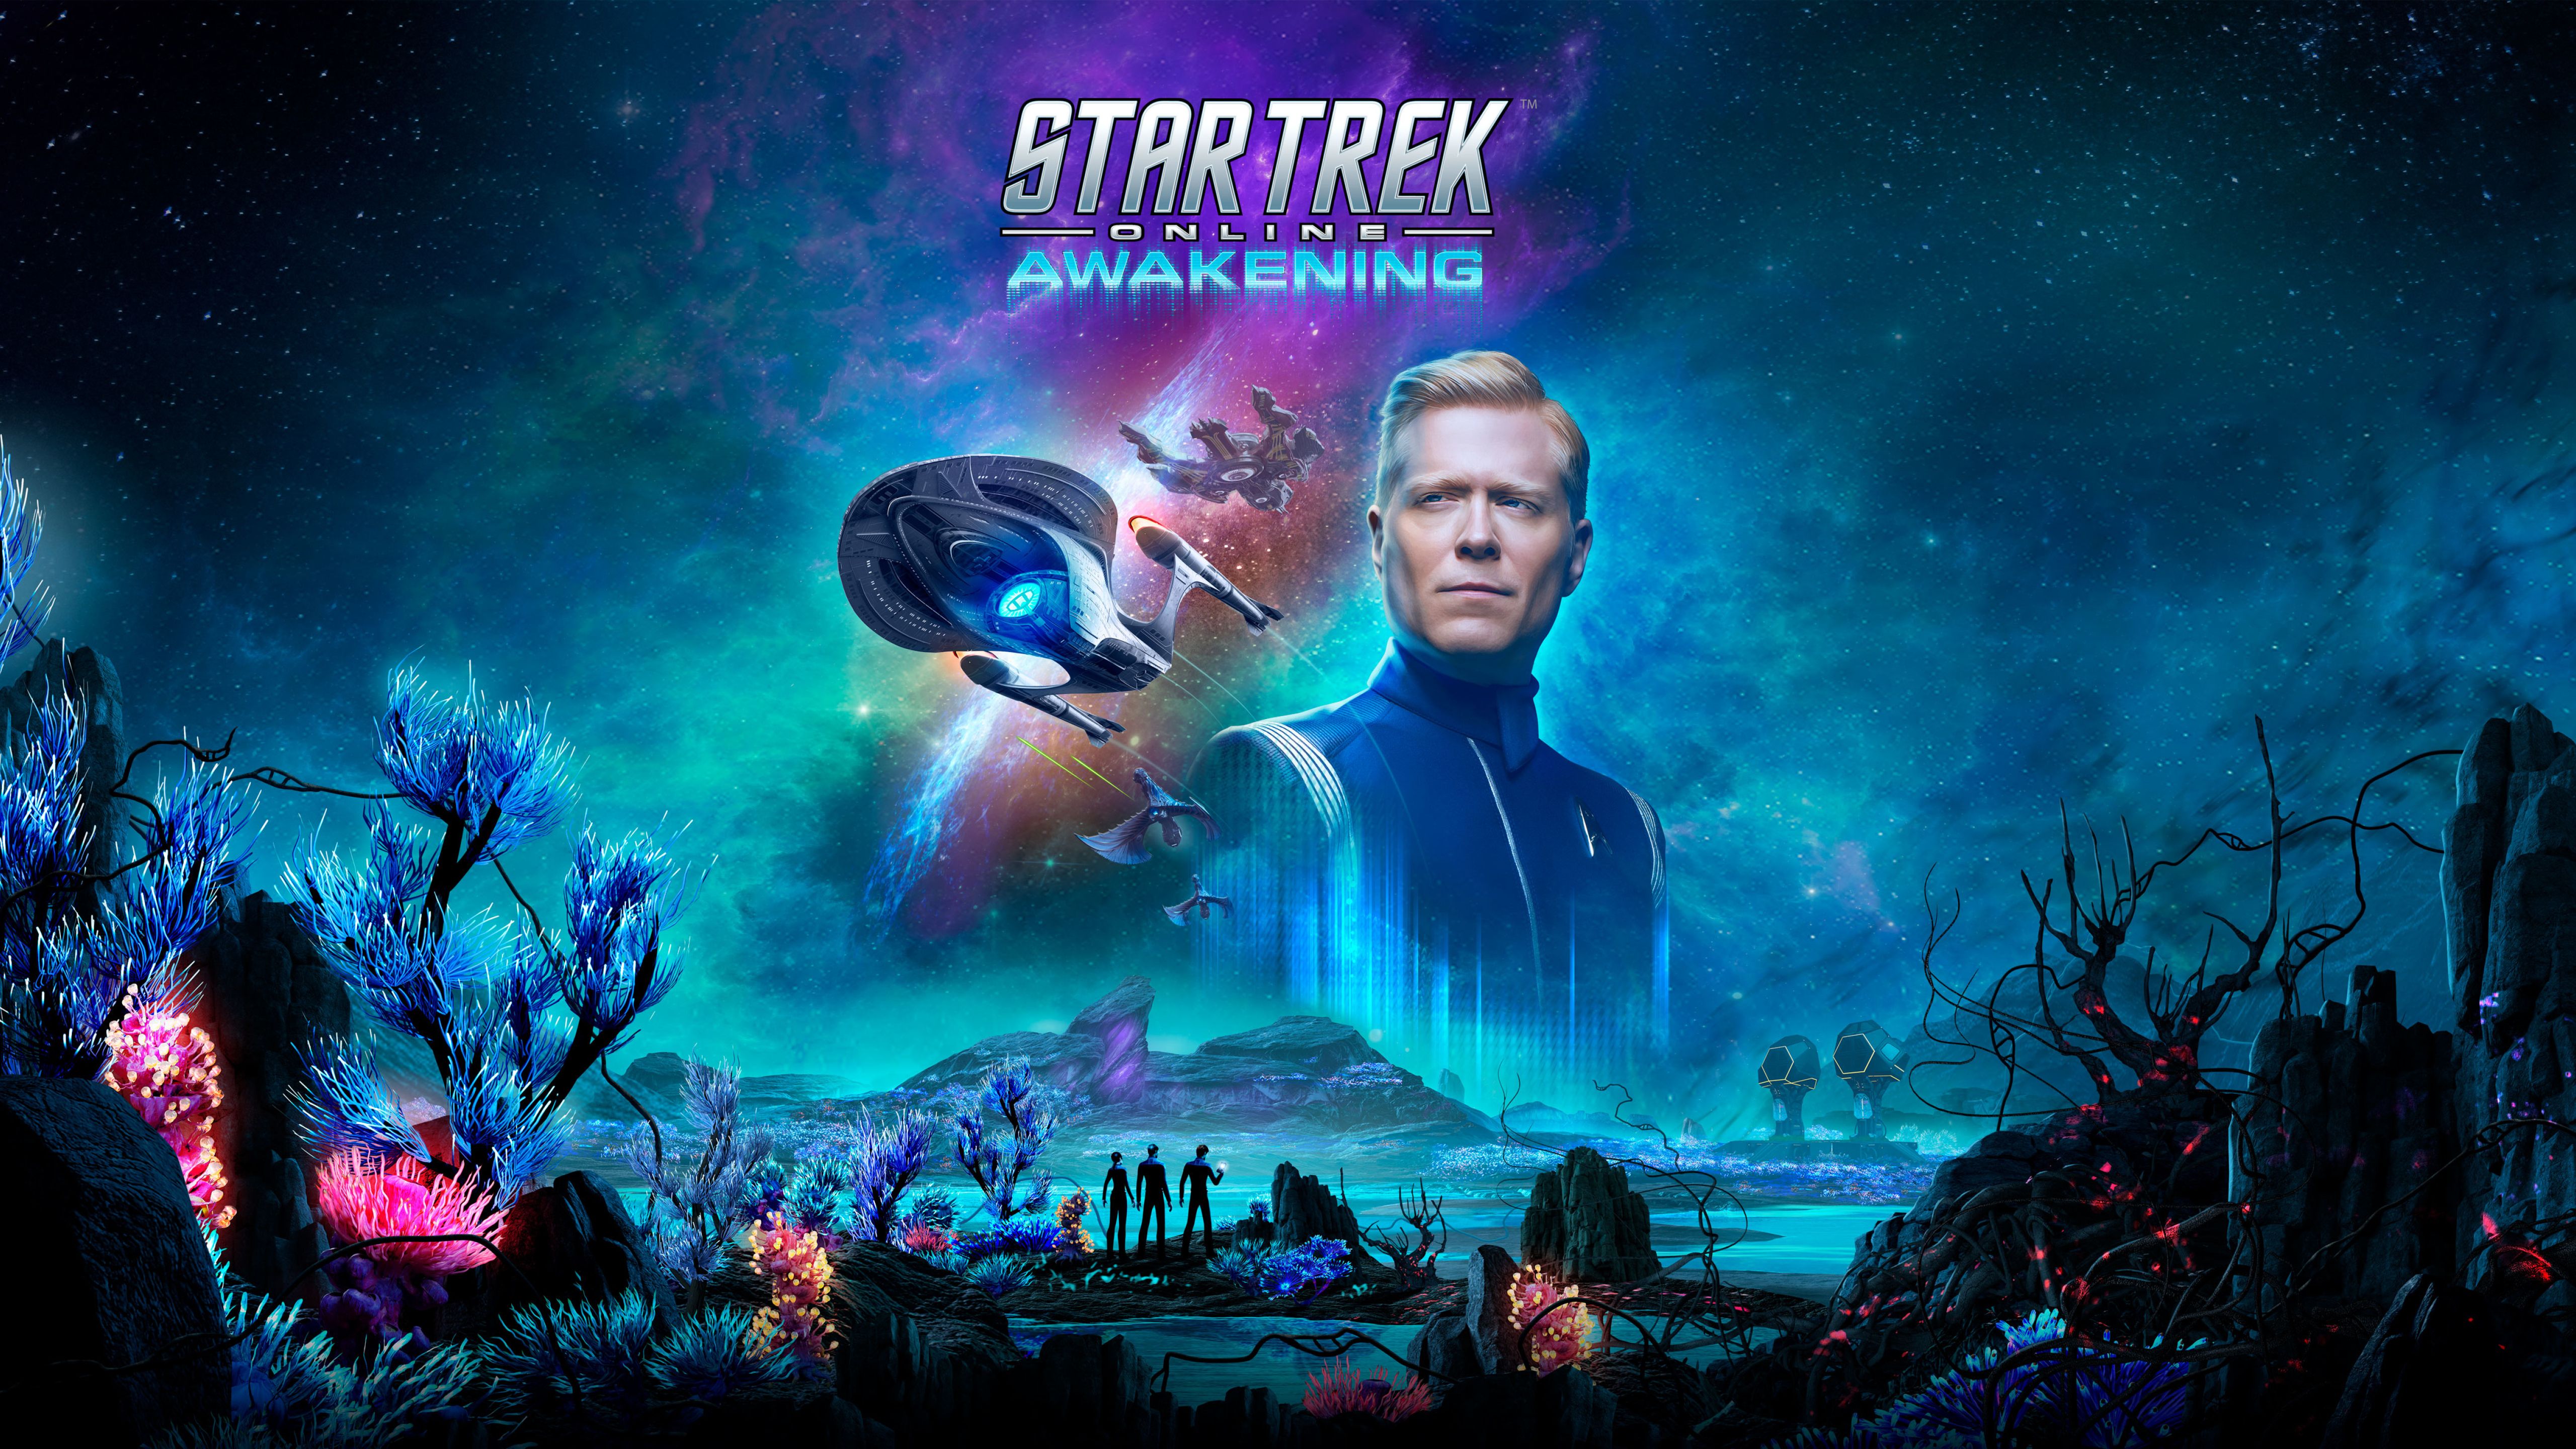 Star Trek Online 2019 5K Wallpaper, HD Games 4K Wallpaper, Image, Photo and Background